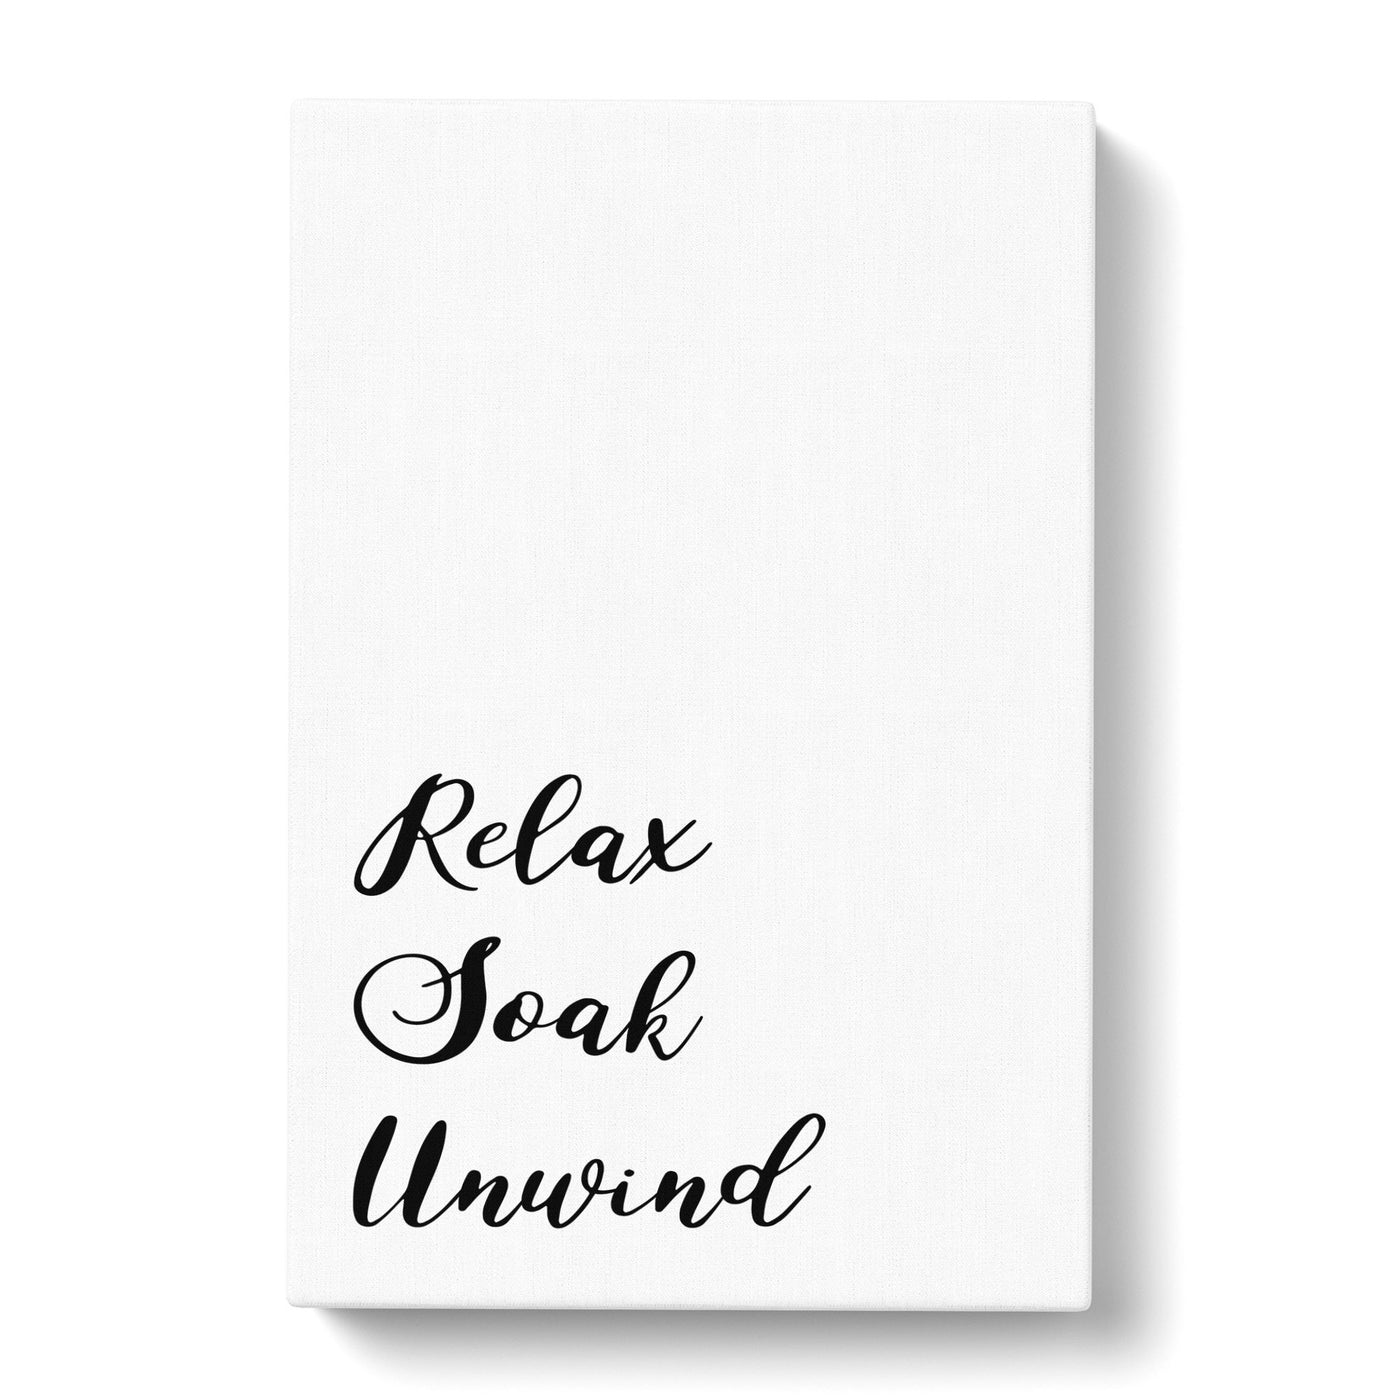 Relax Soak Unwind Typography Canvas Print Main Image